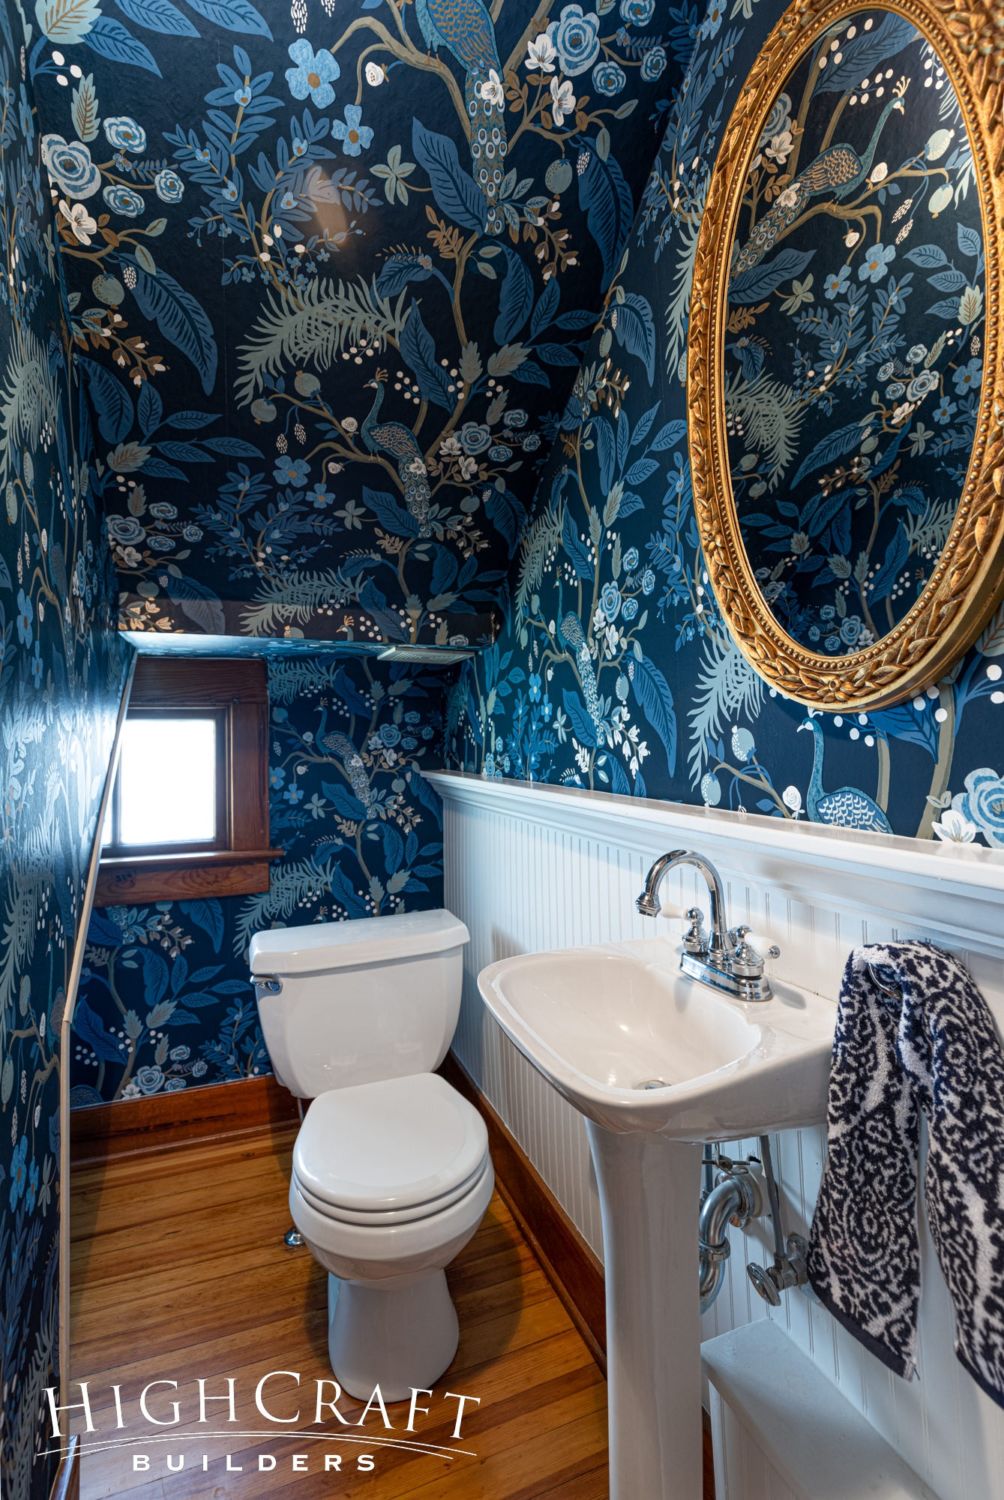 https://www.highcraft.net/wp-content/uploads/2022/10/bathroom-remodel-wallpaper-under-eaves.jpg